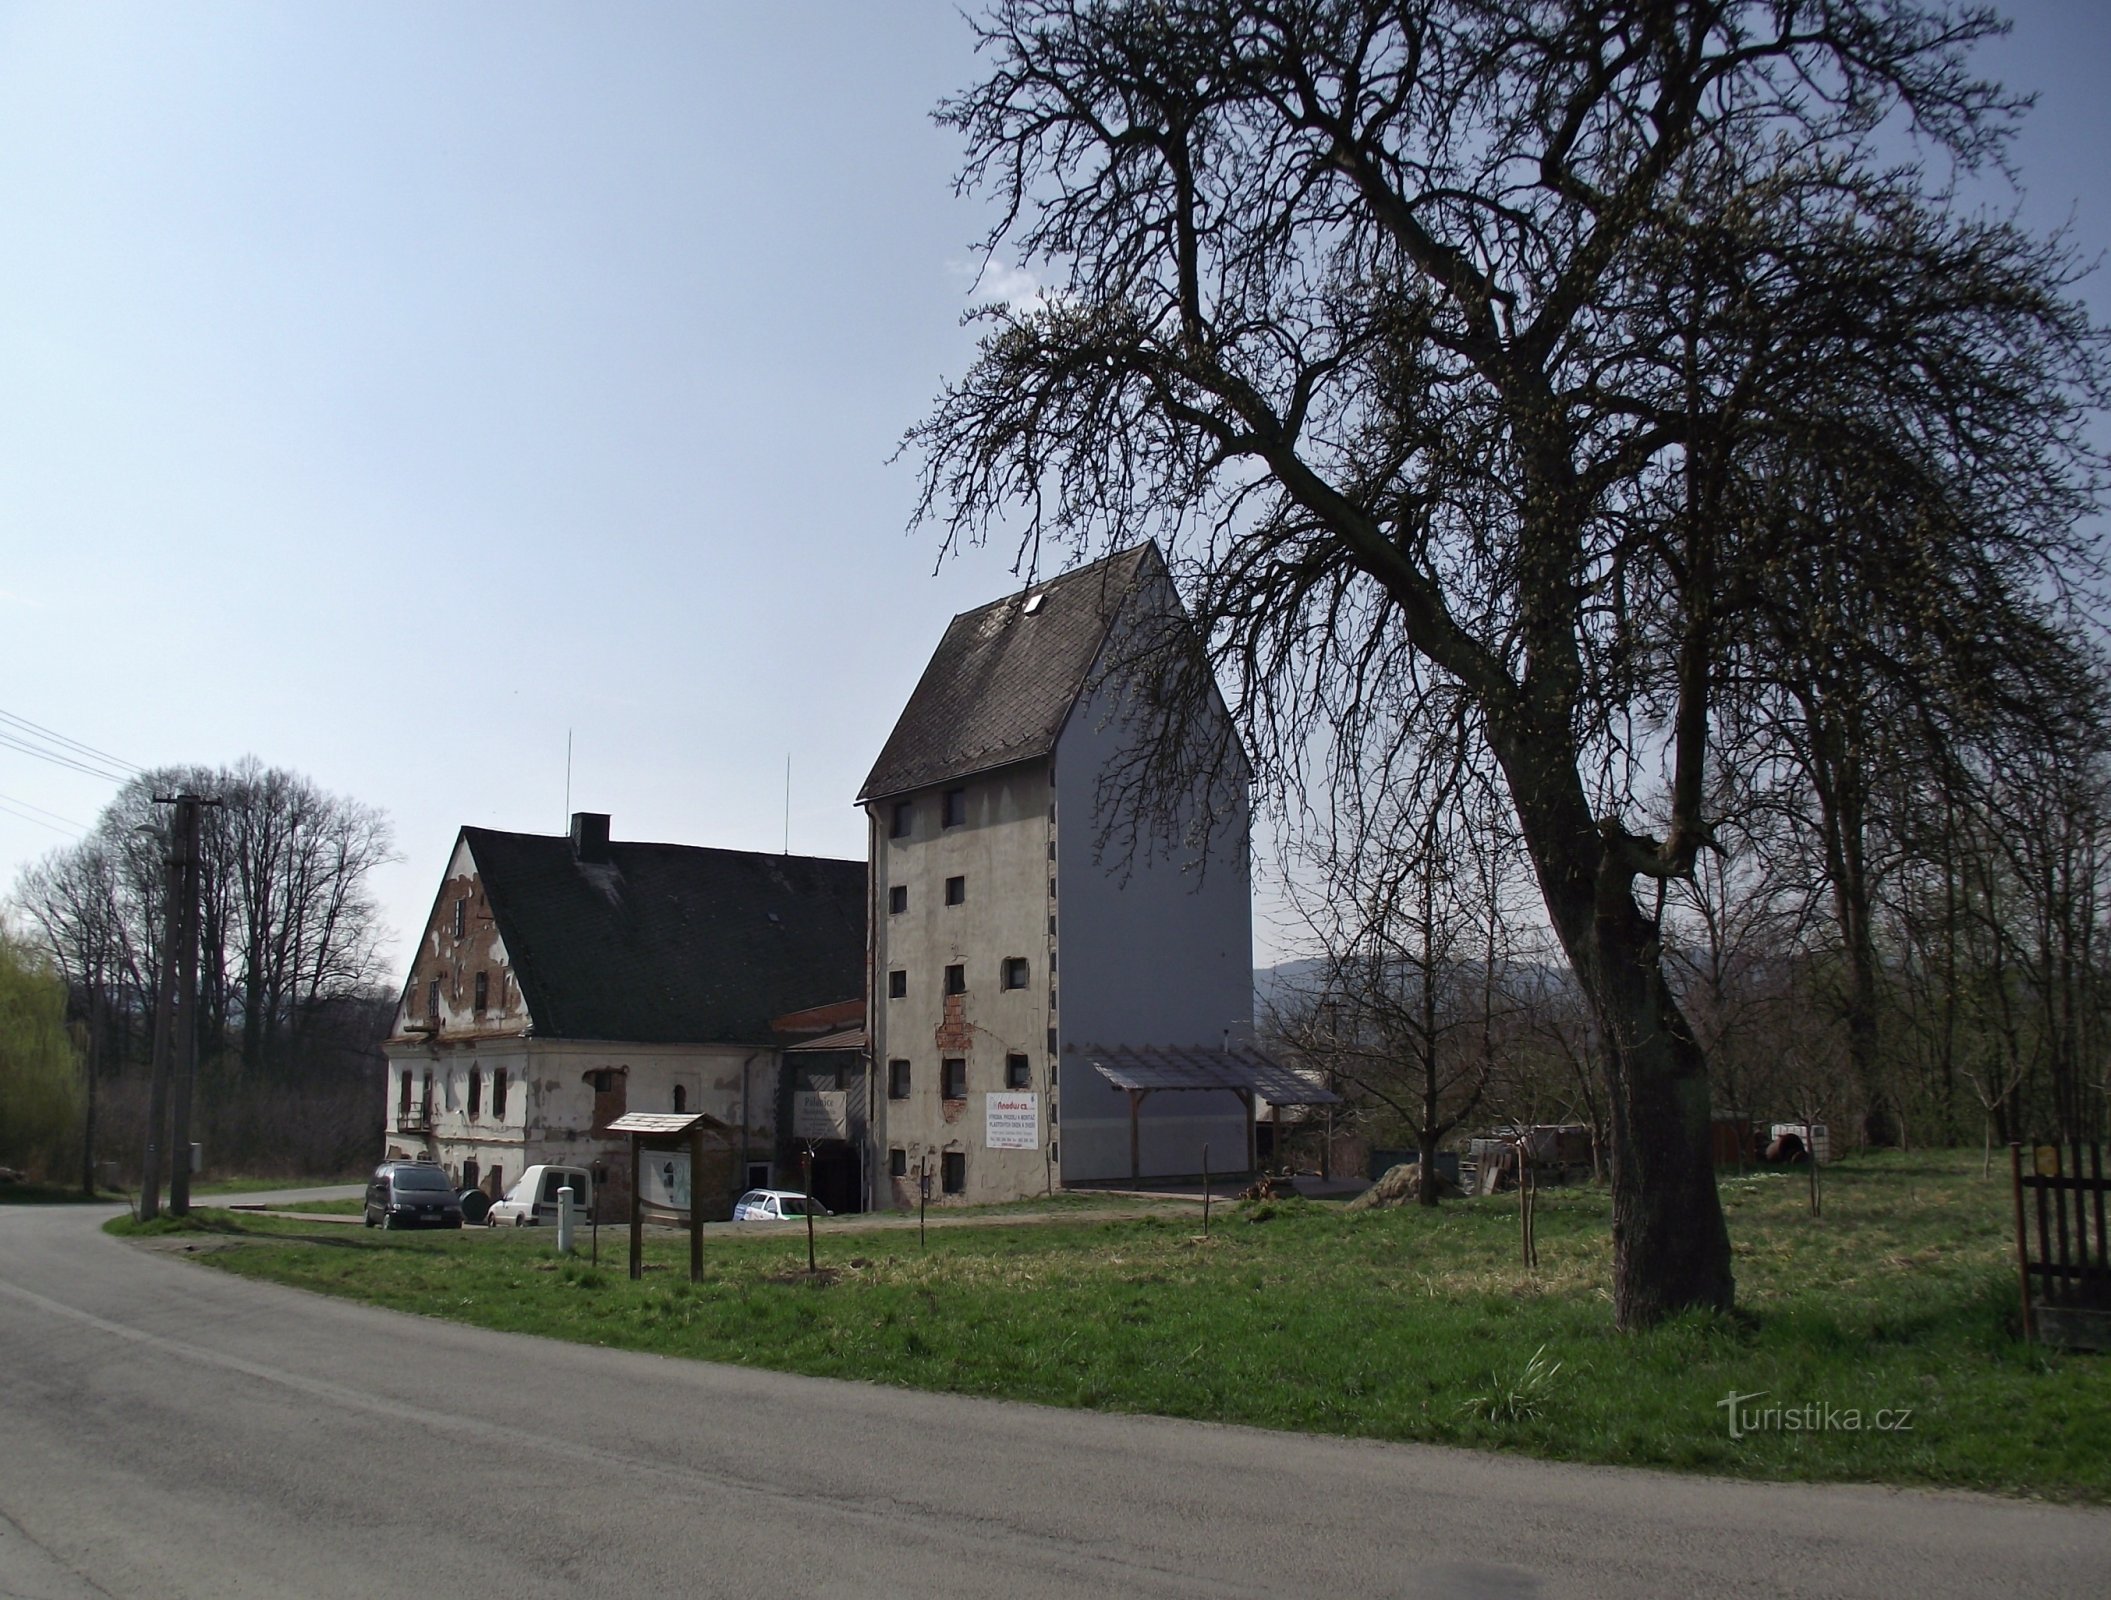 Maršíkovský-Mühle (Haltestelle Nr. 3)